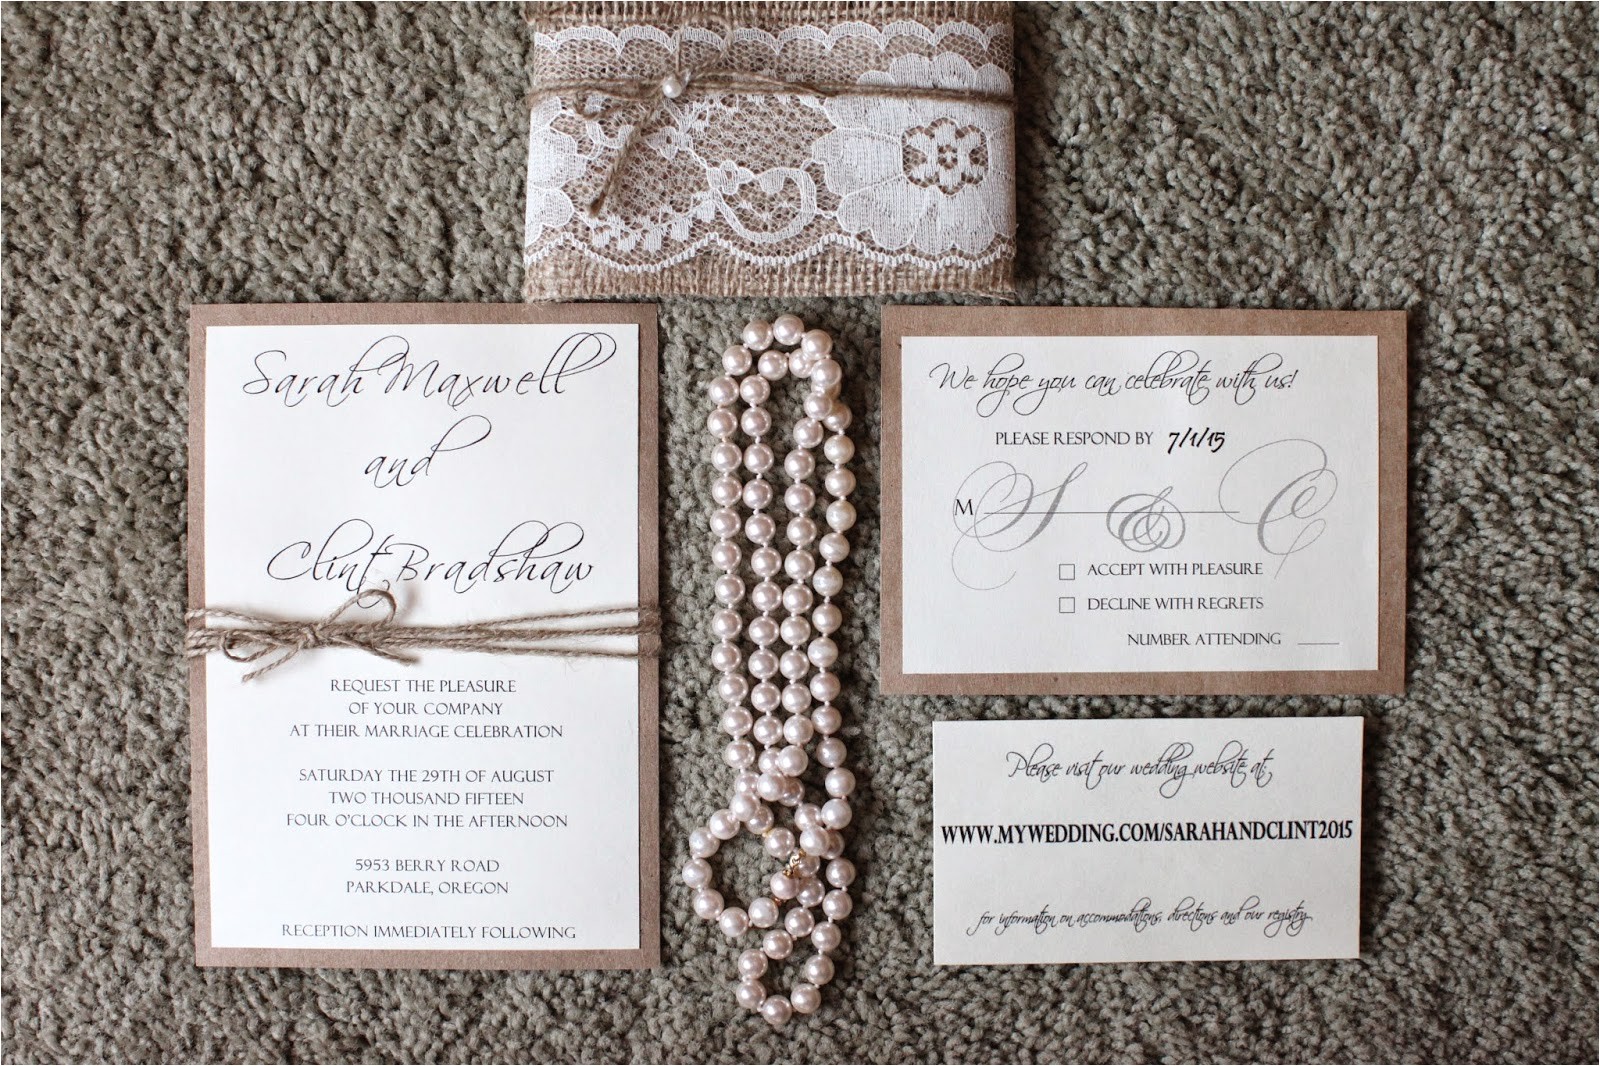 staples wedding invitation kits wedding invitation cards staples new wedding